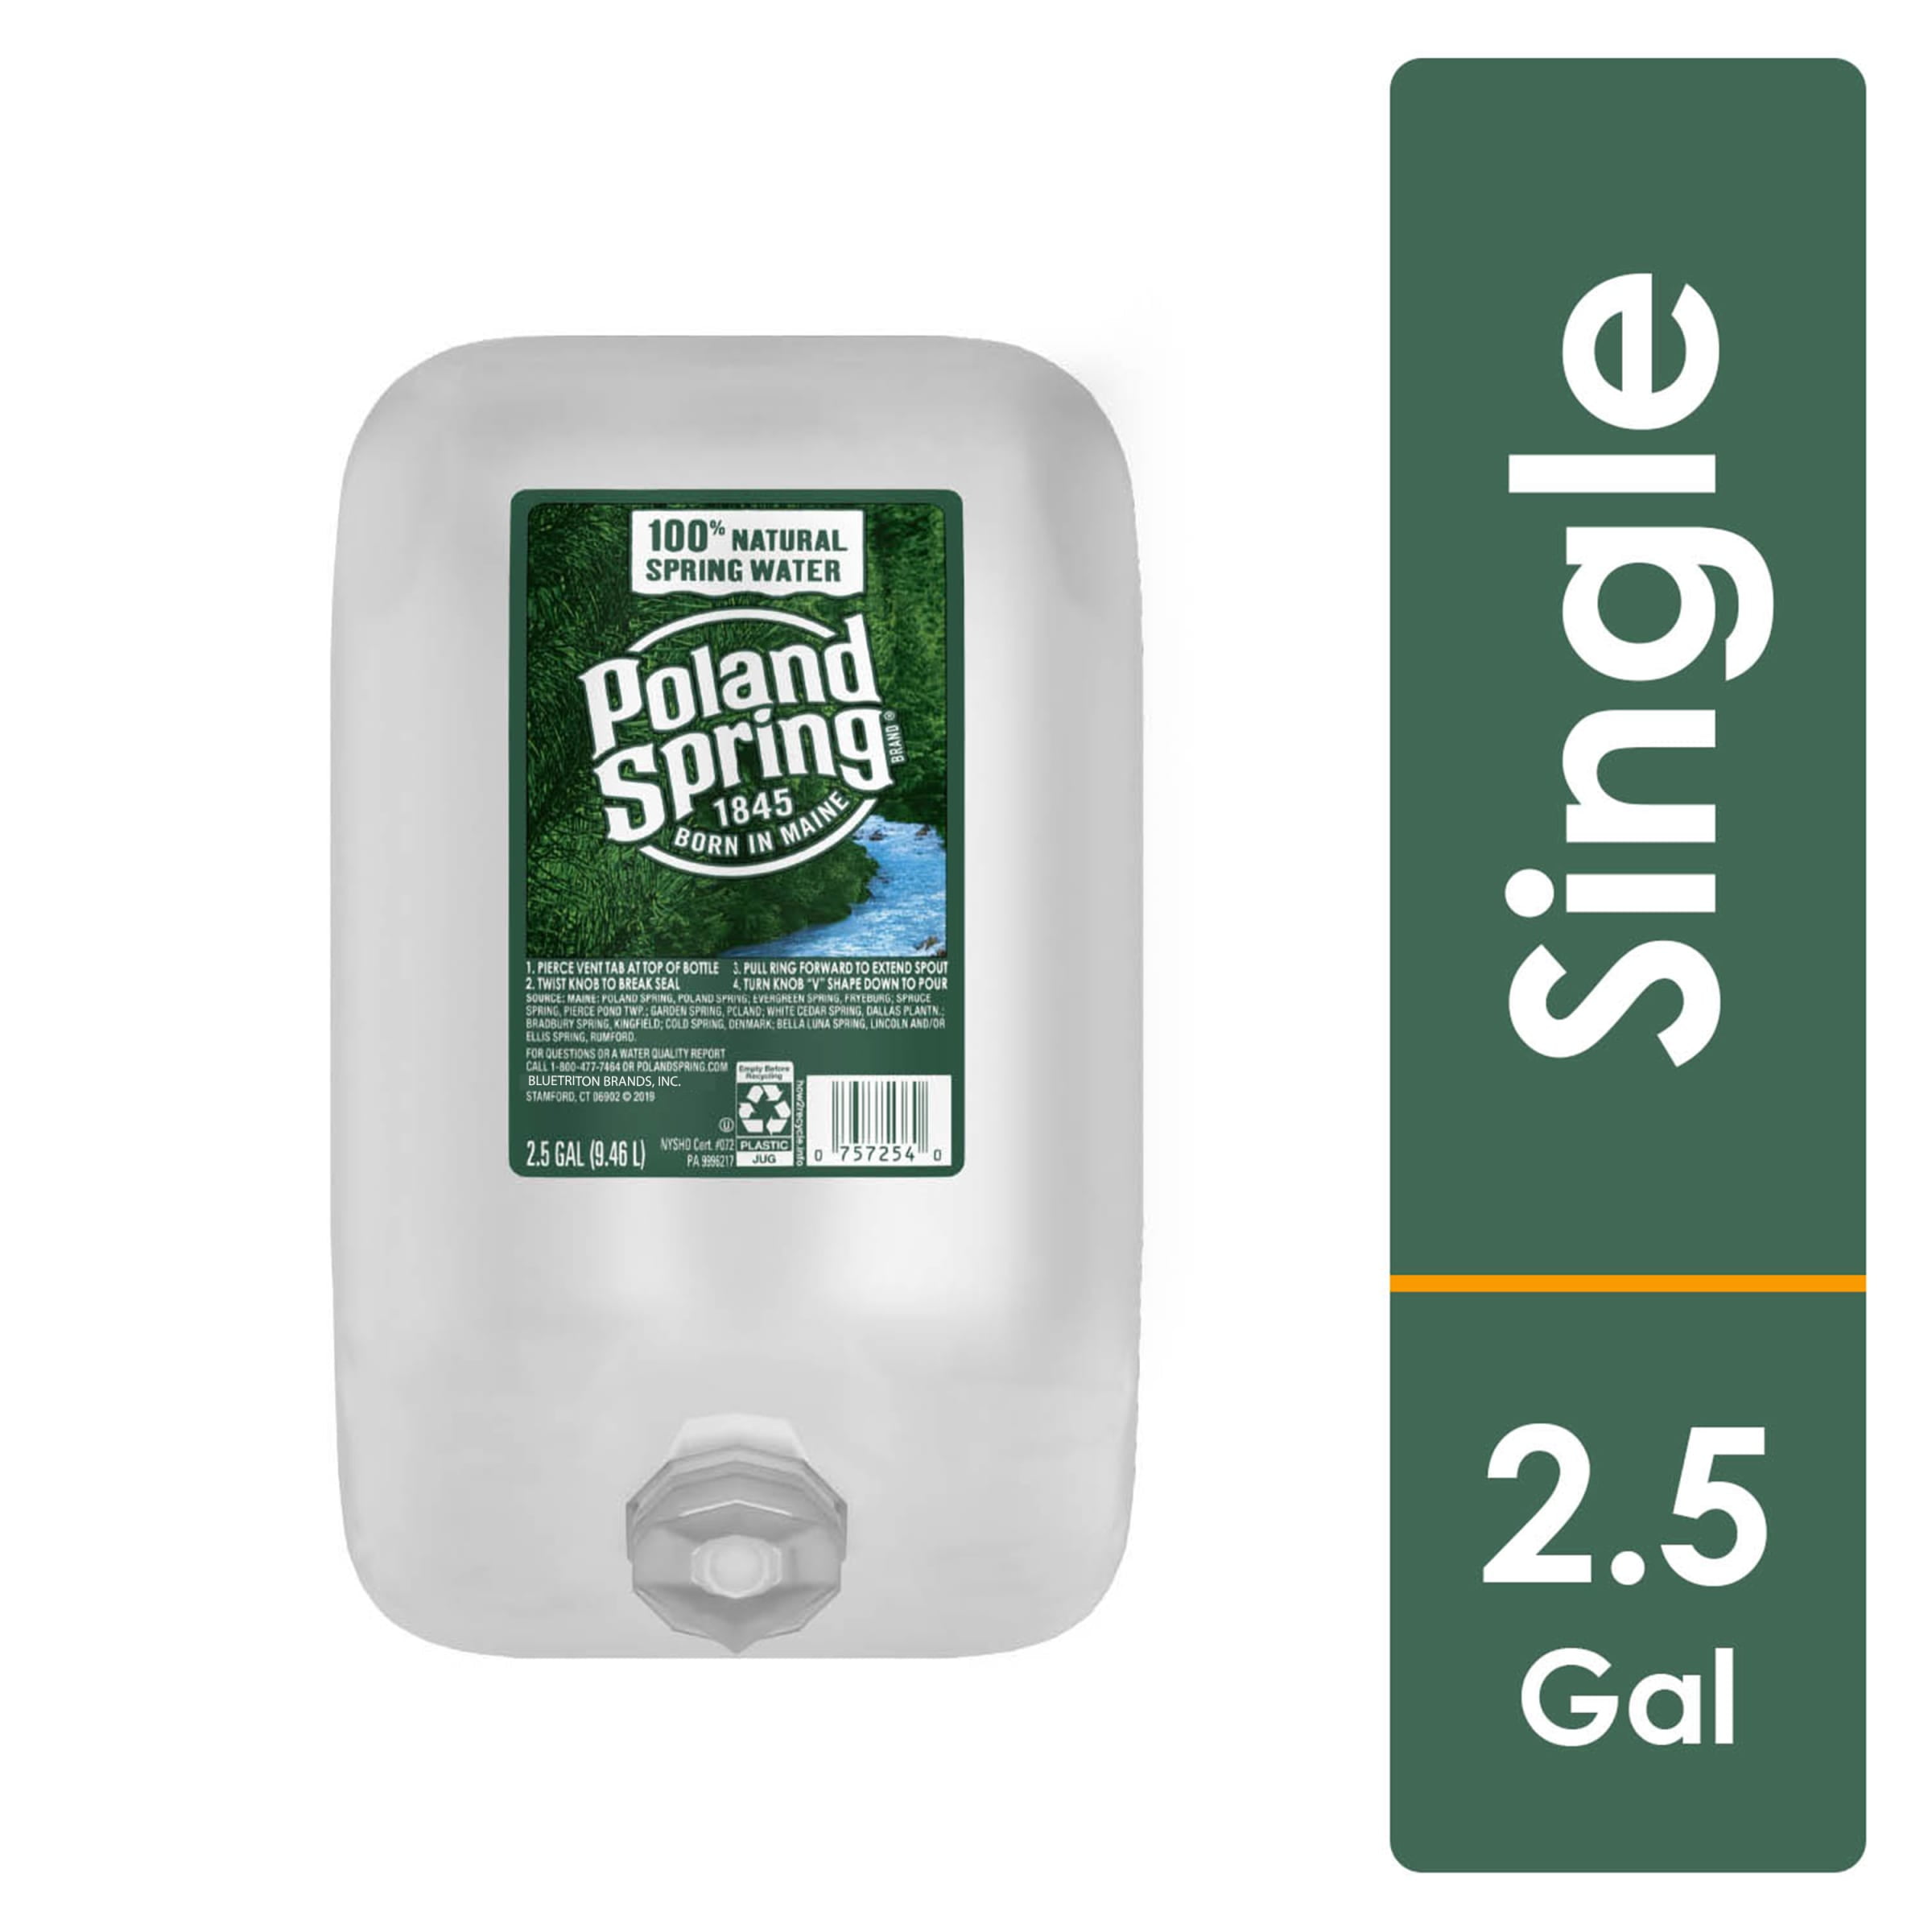 POLAND SPRING Brand 100% Natural Spring Water, 2.5-gallon plastic jug